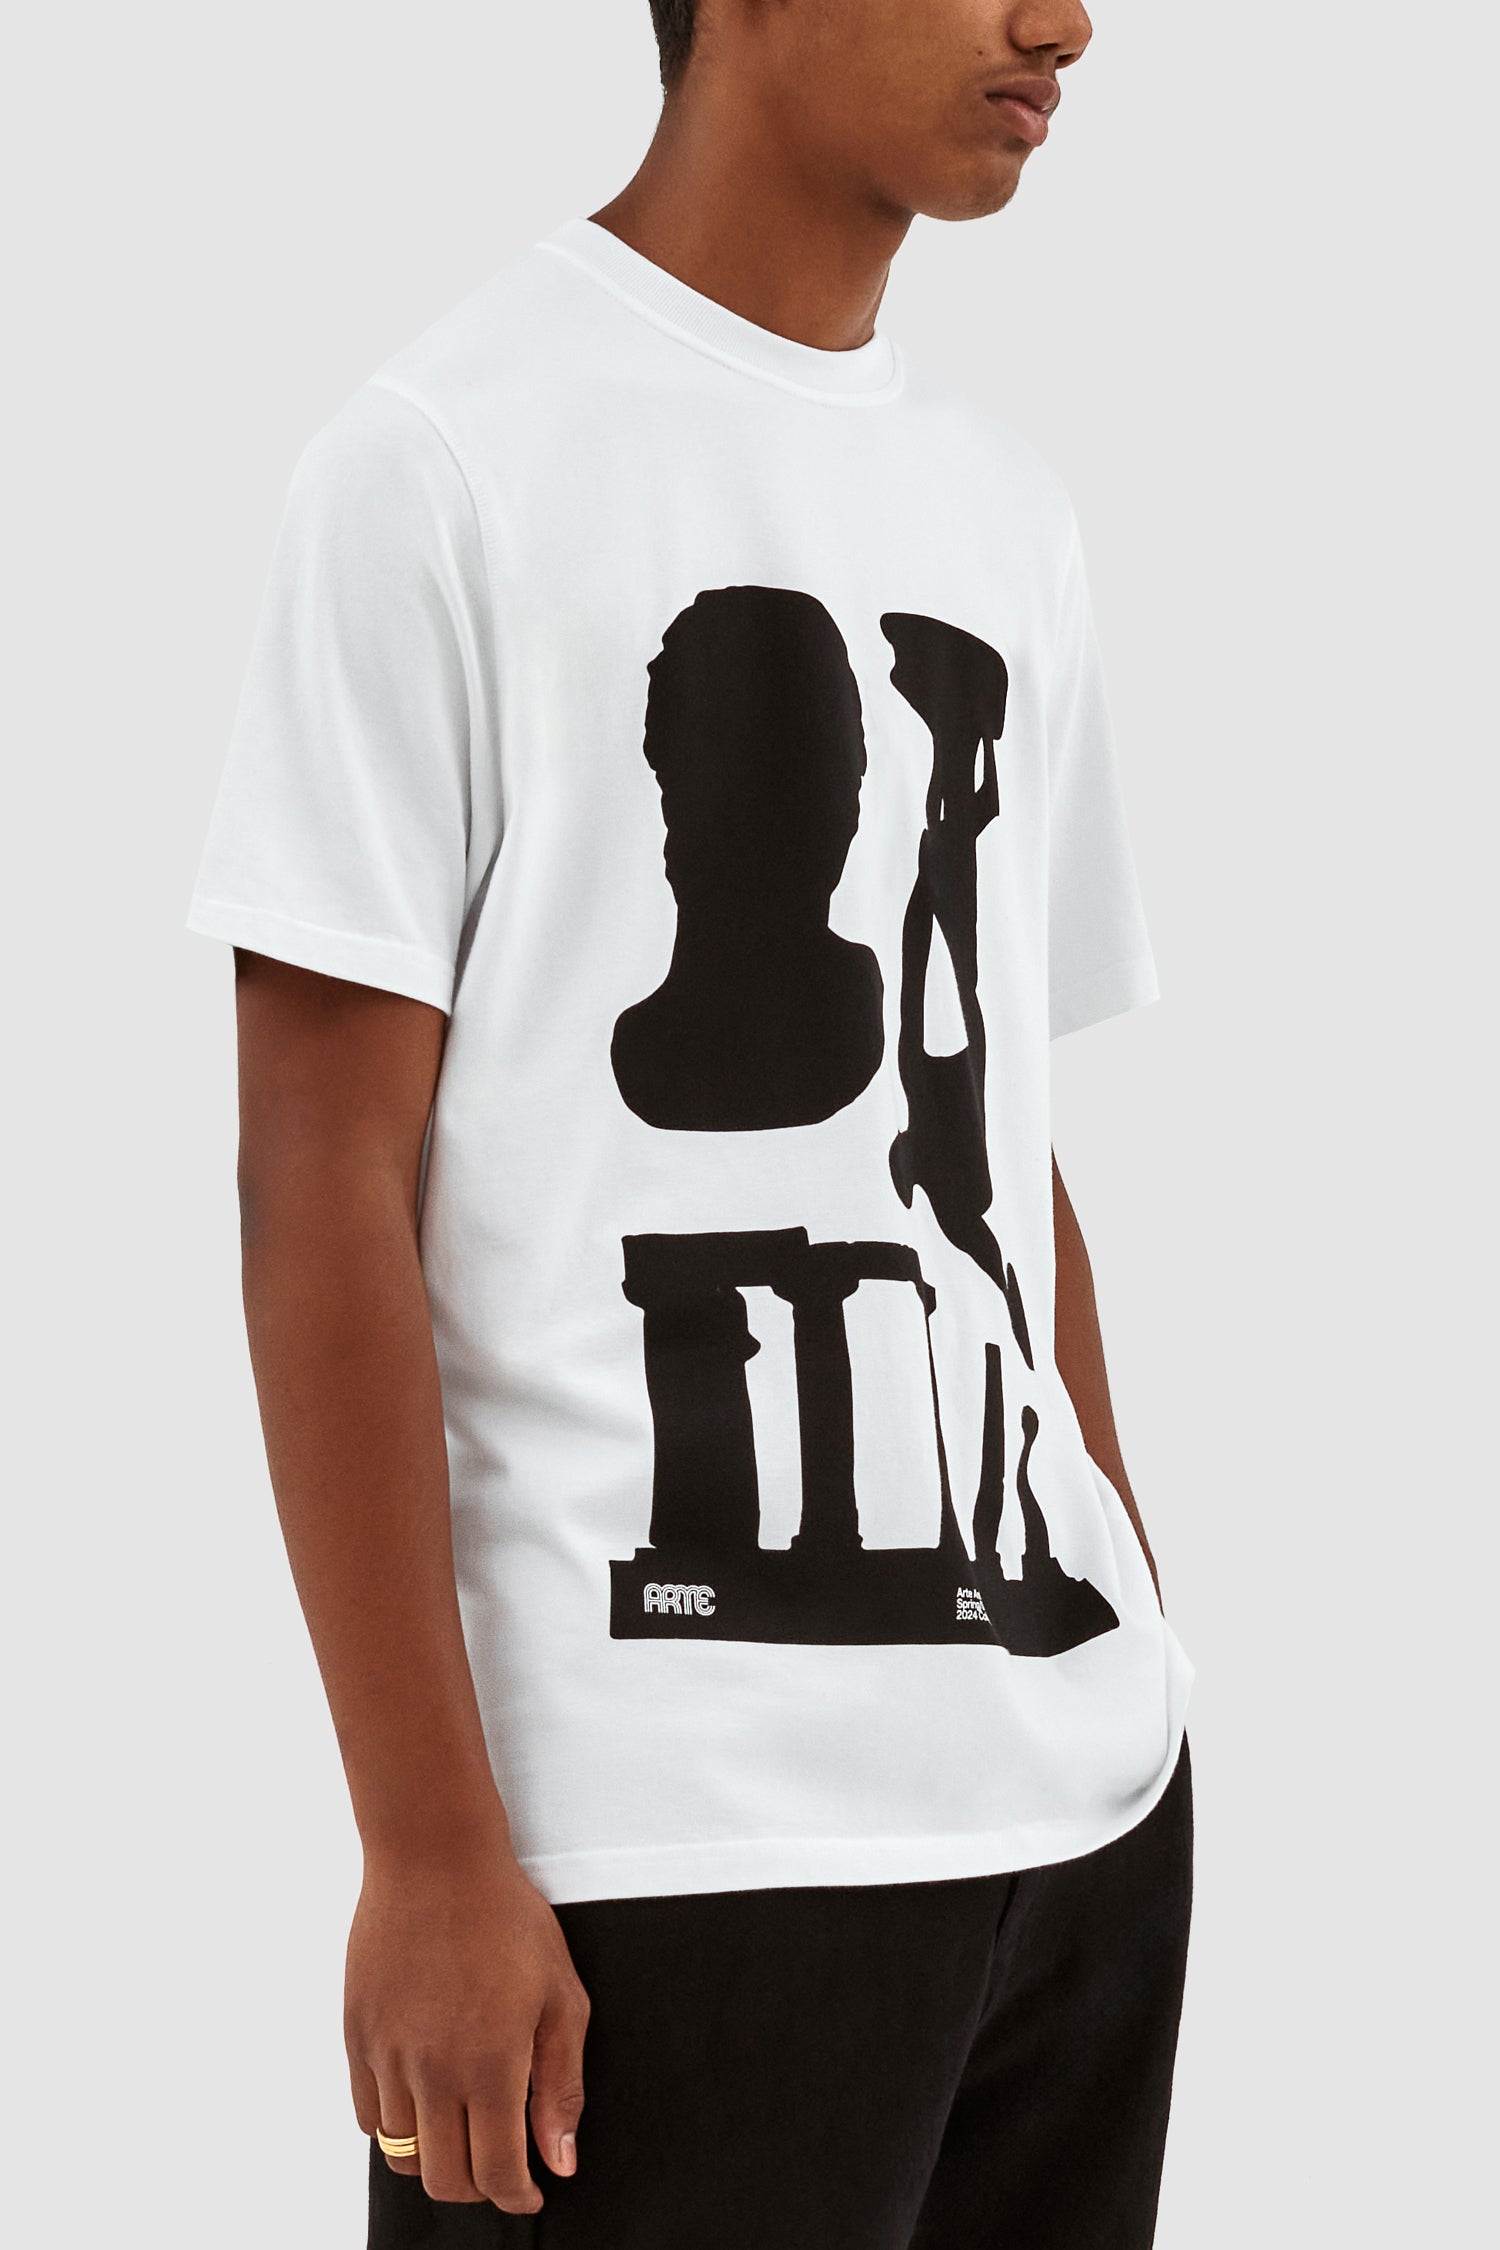 Teo - T-shirt imprimé - Blanc